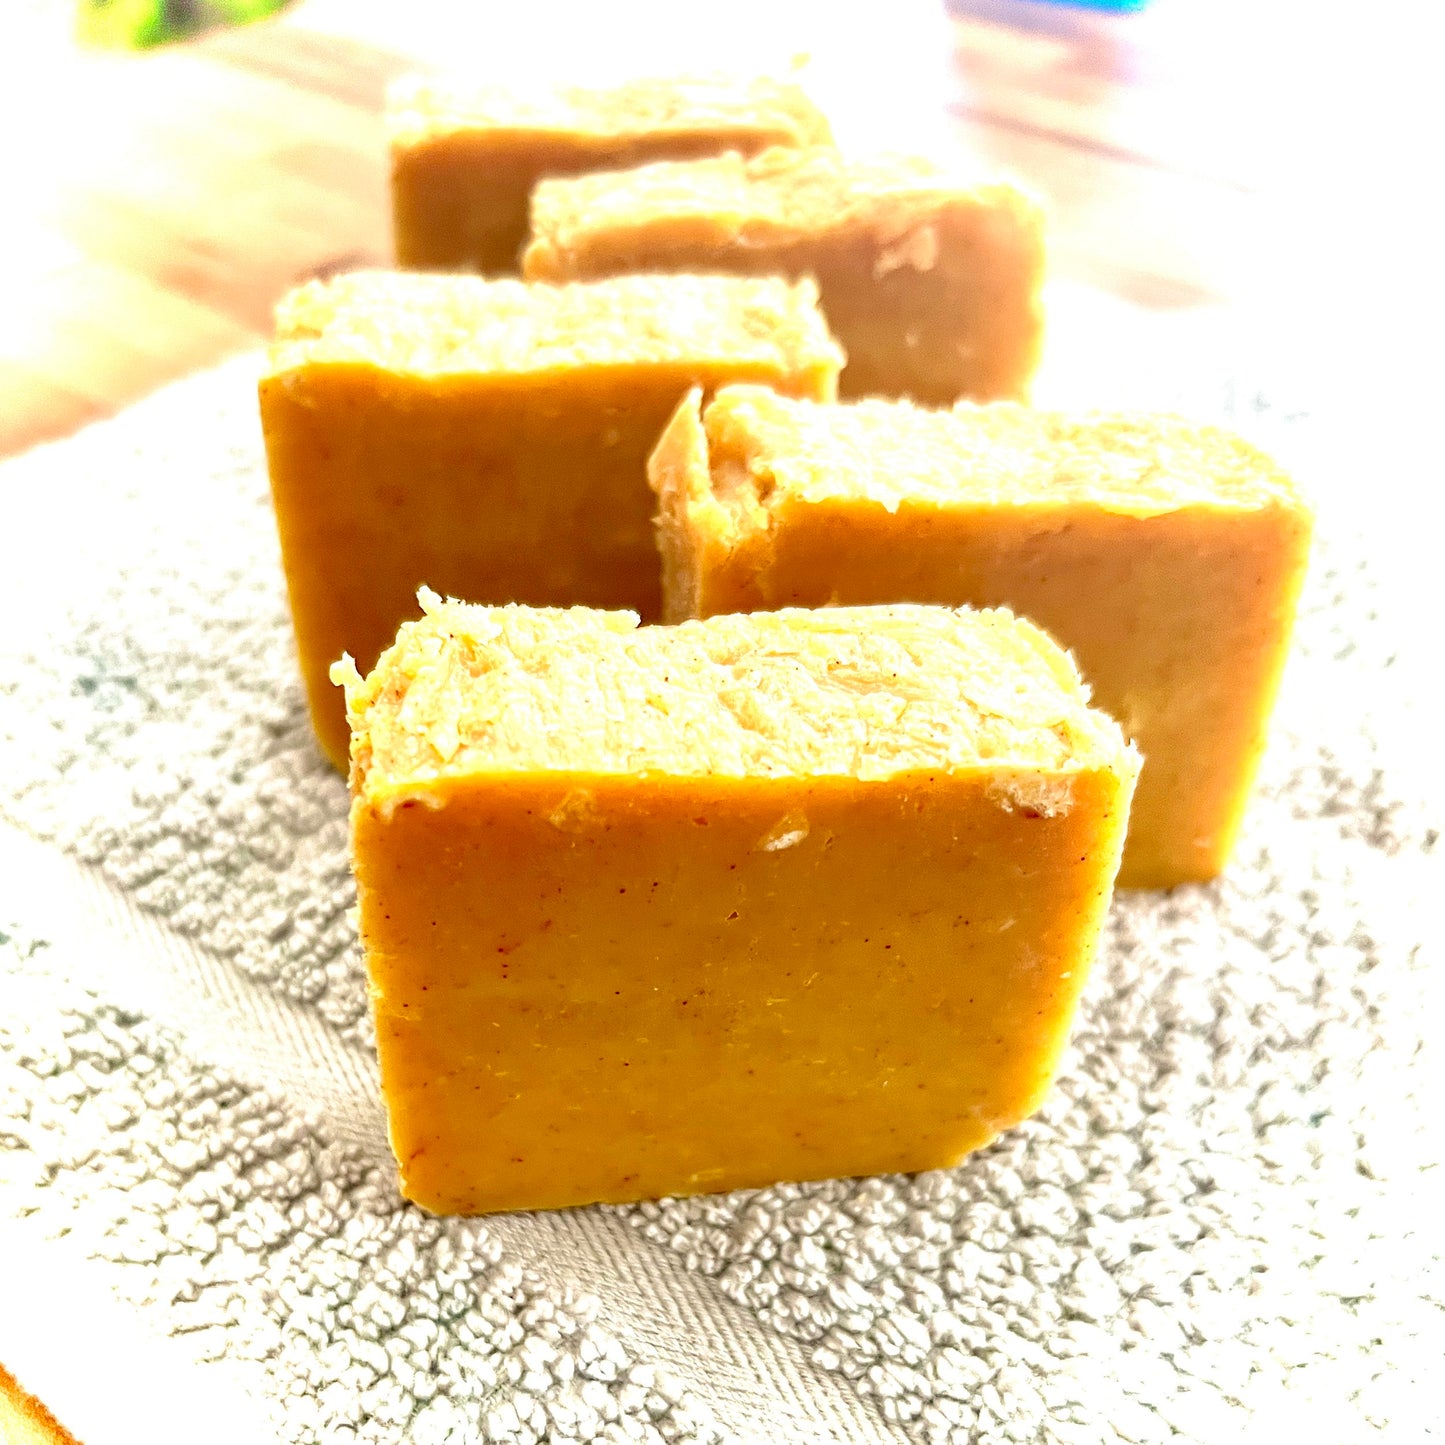 Carrot & Lemongrass Soap with Turmeric